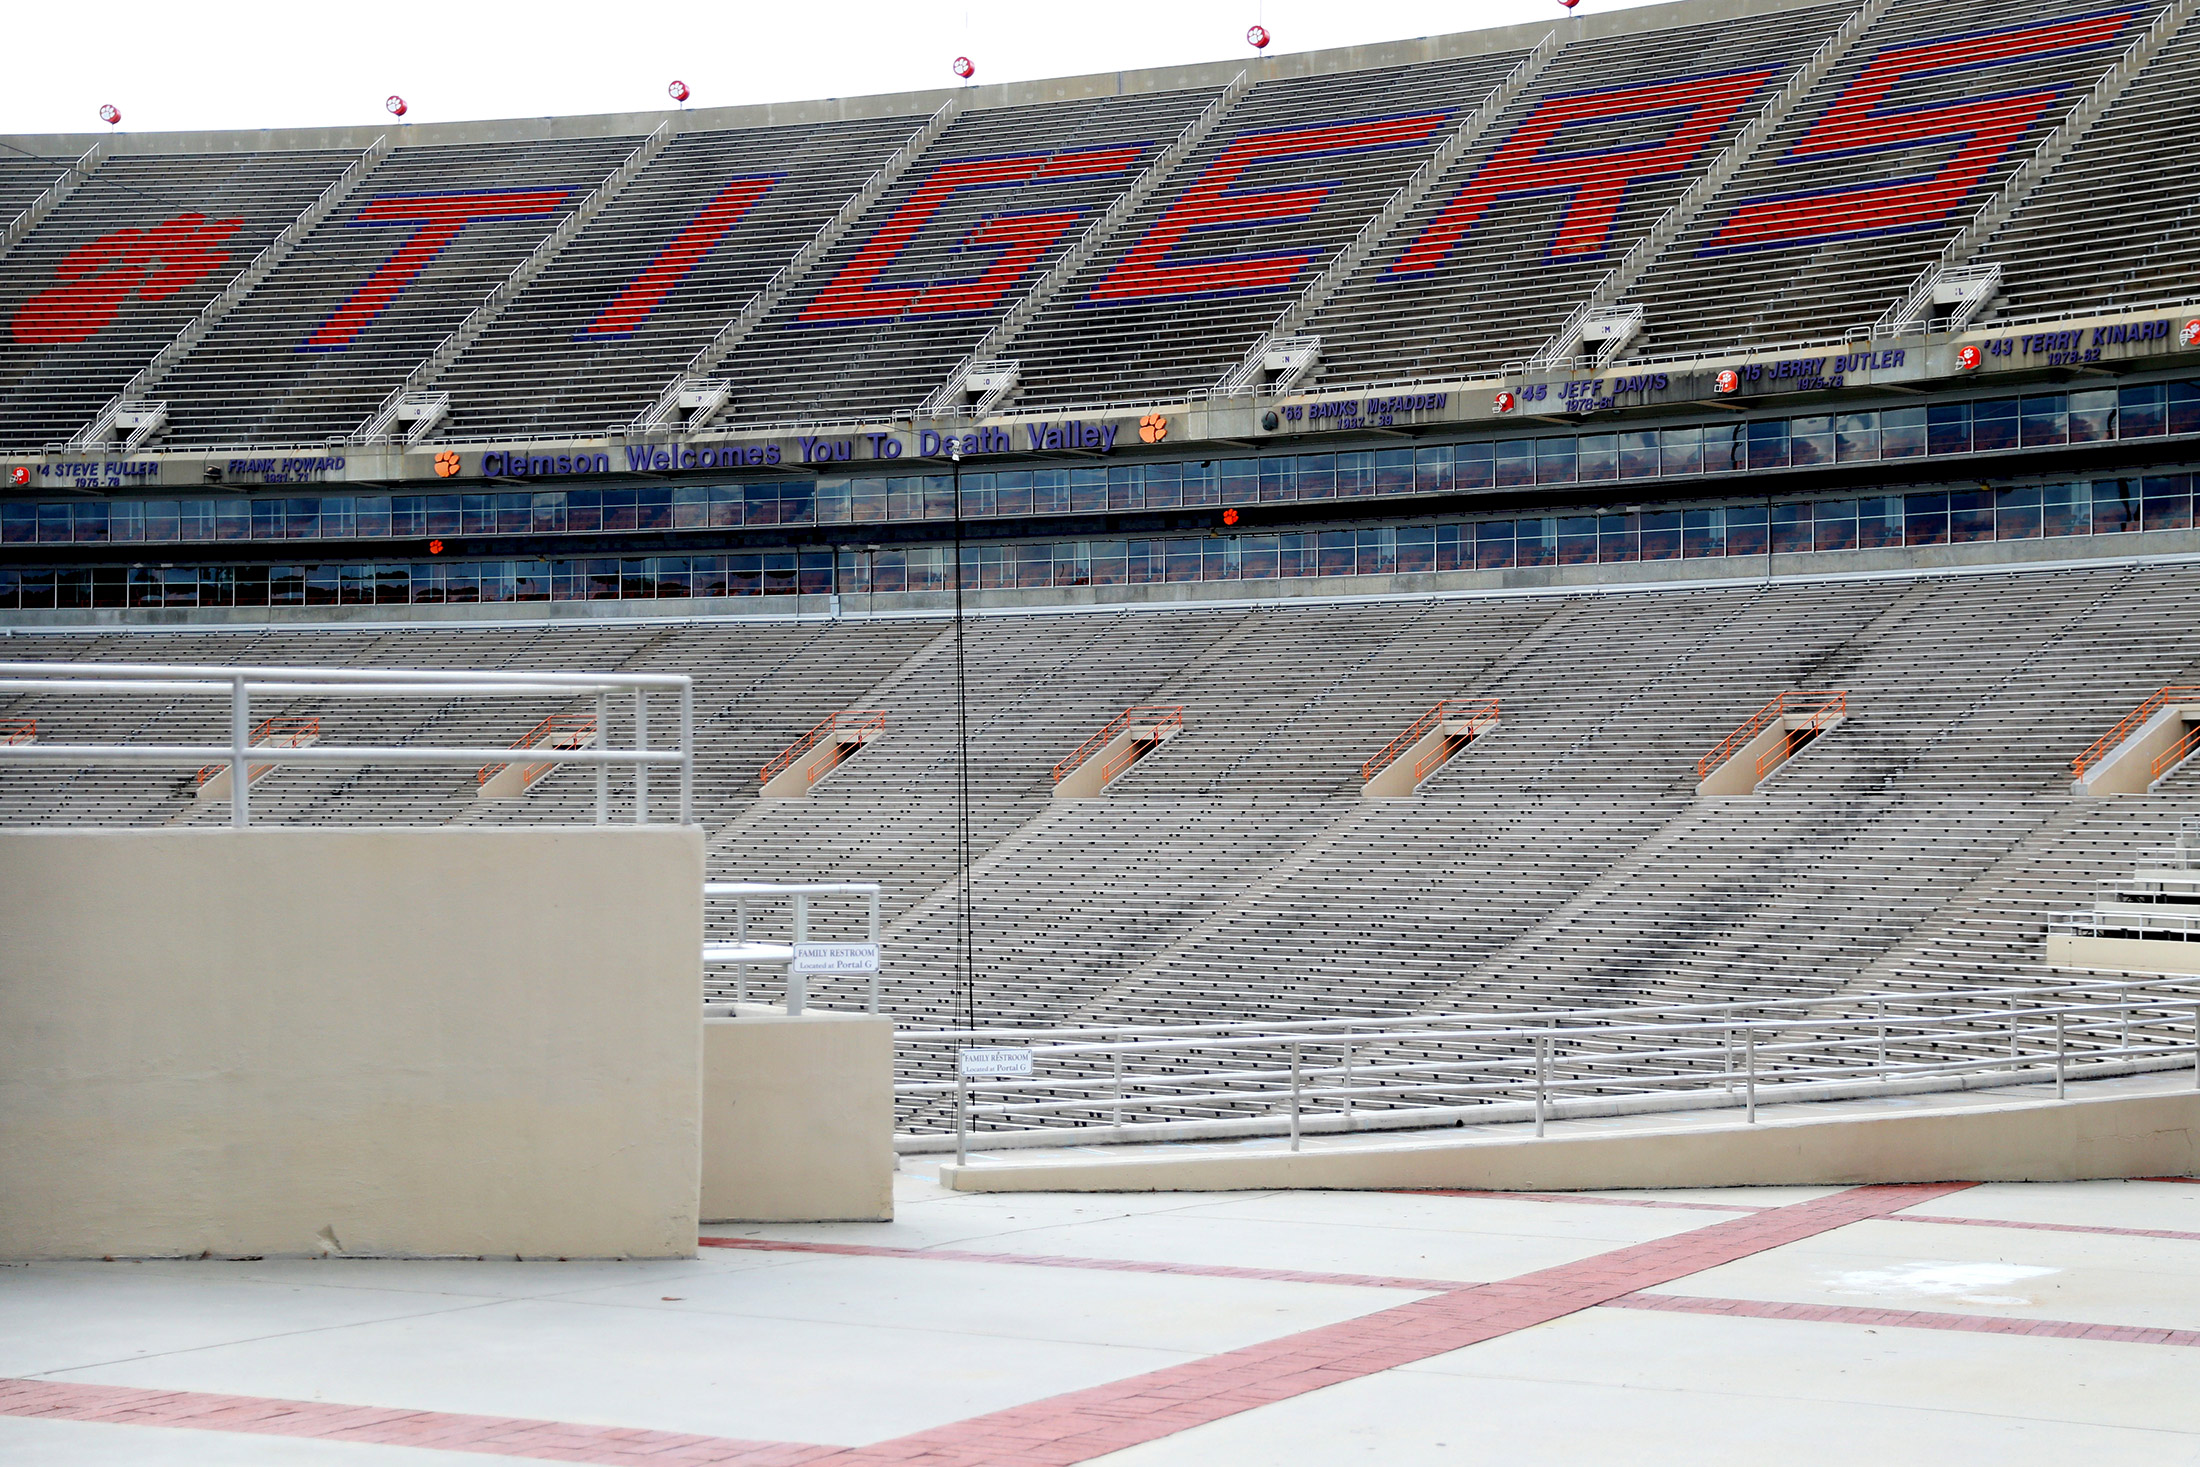 Empty stands at Clemson Memorial Stadium in South Carolina.